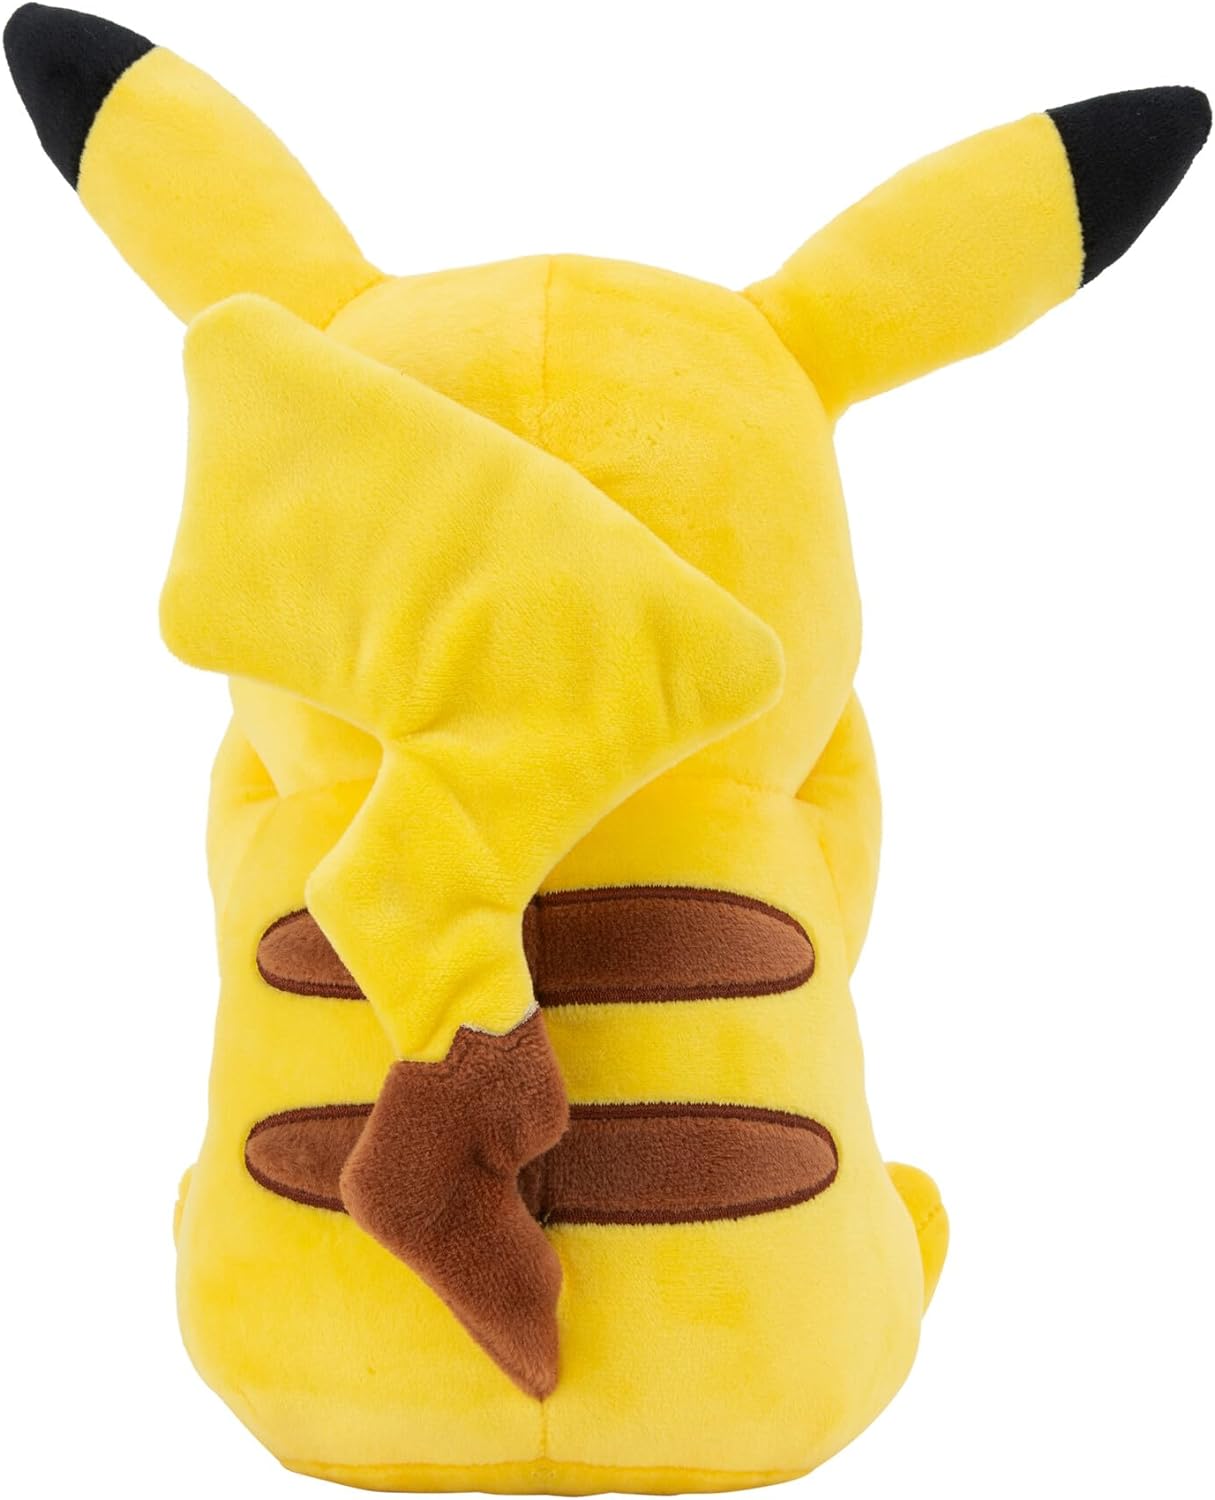 Pokémon - Pikachu 20 cm